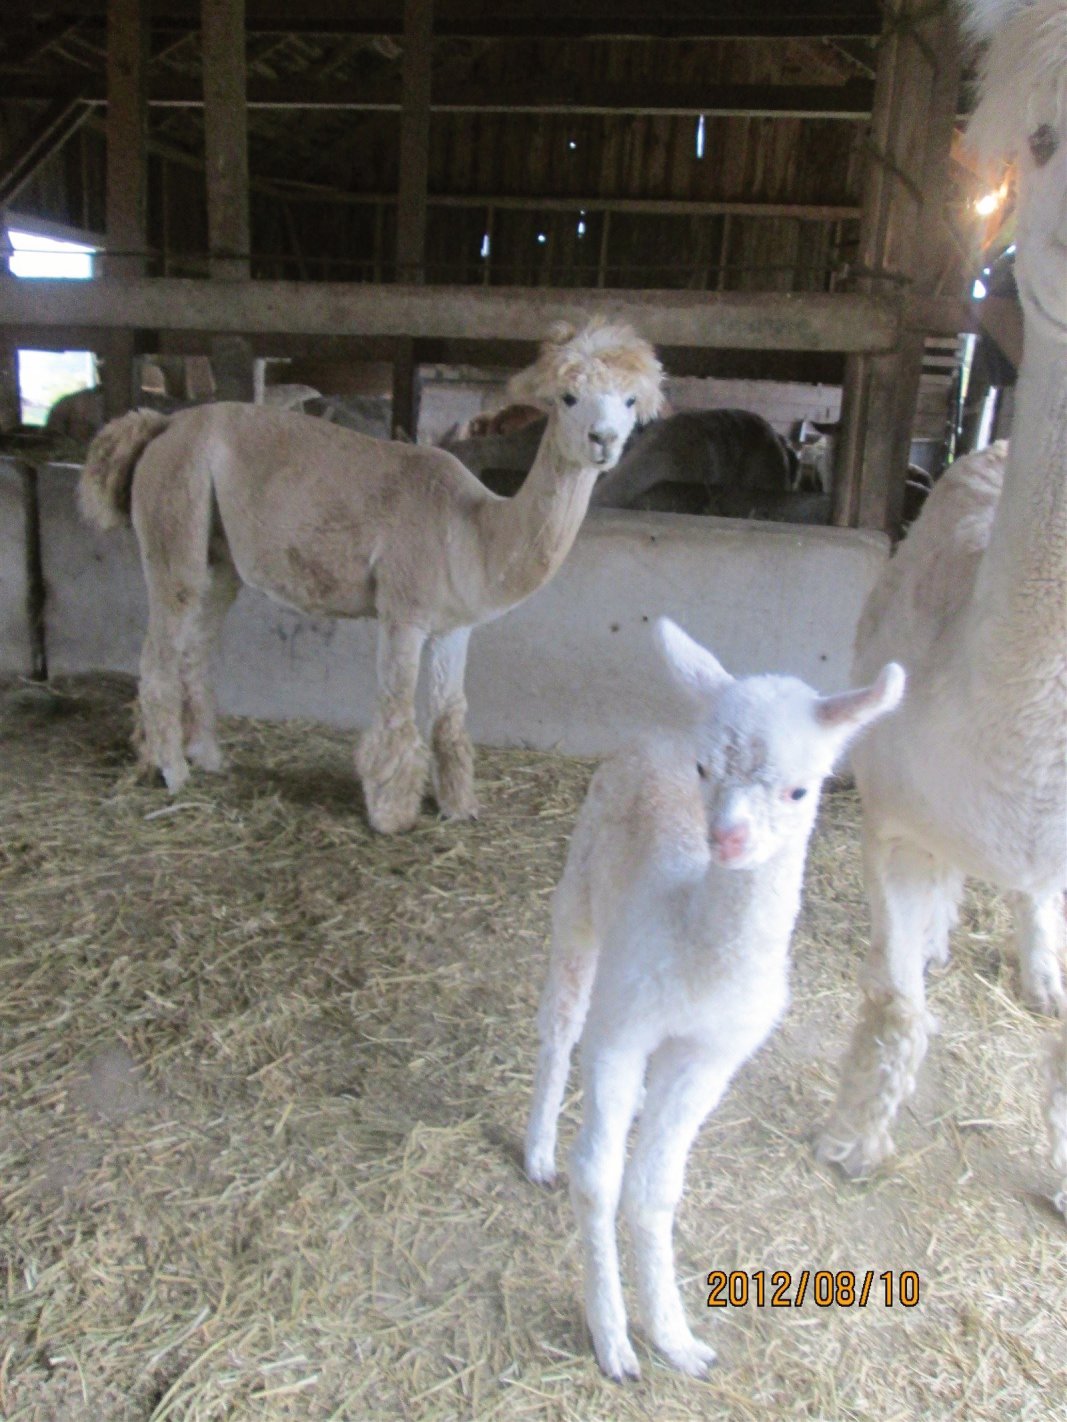 Baby alpaca and mom